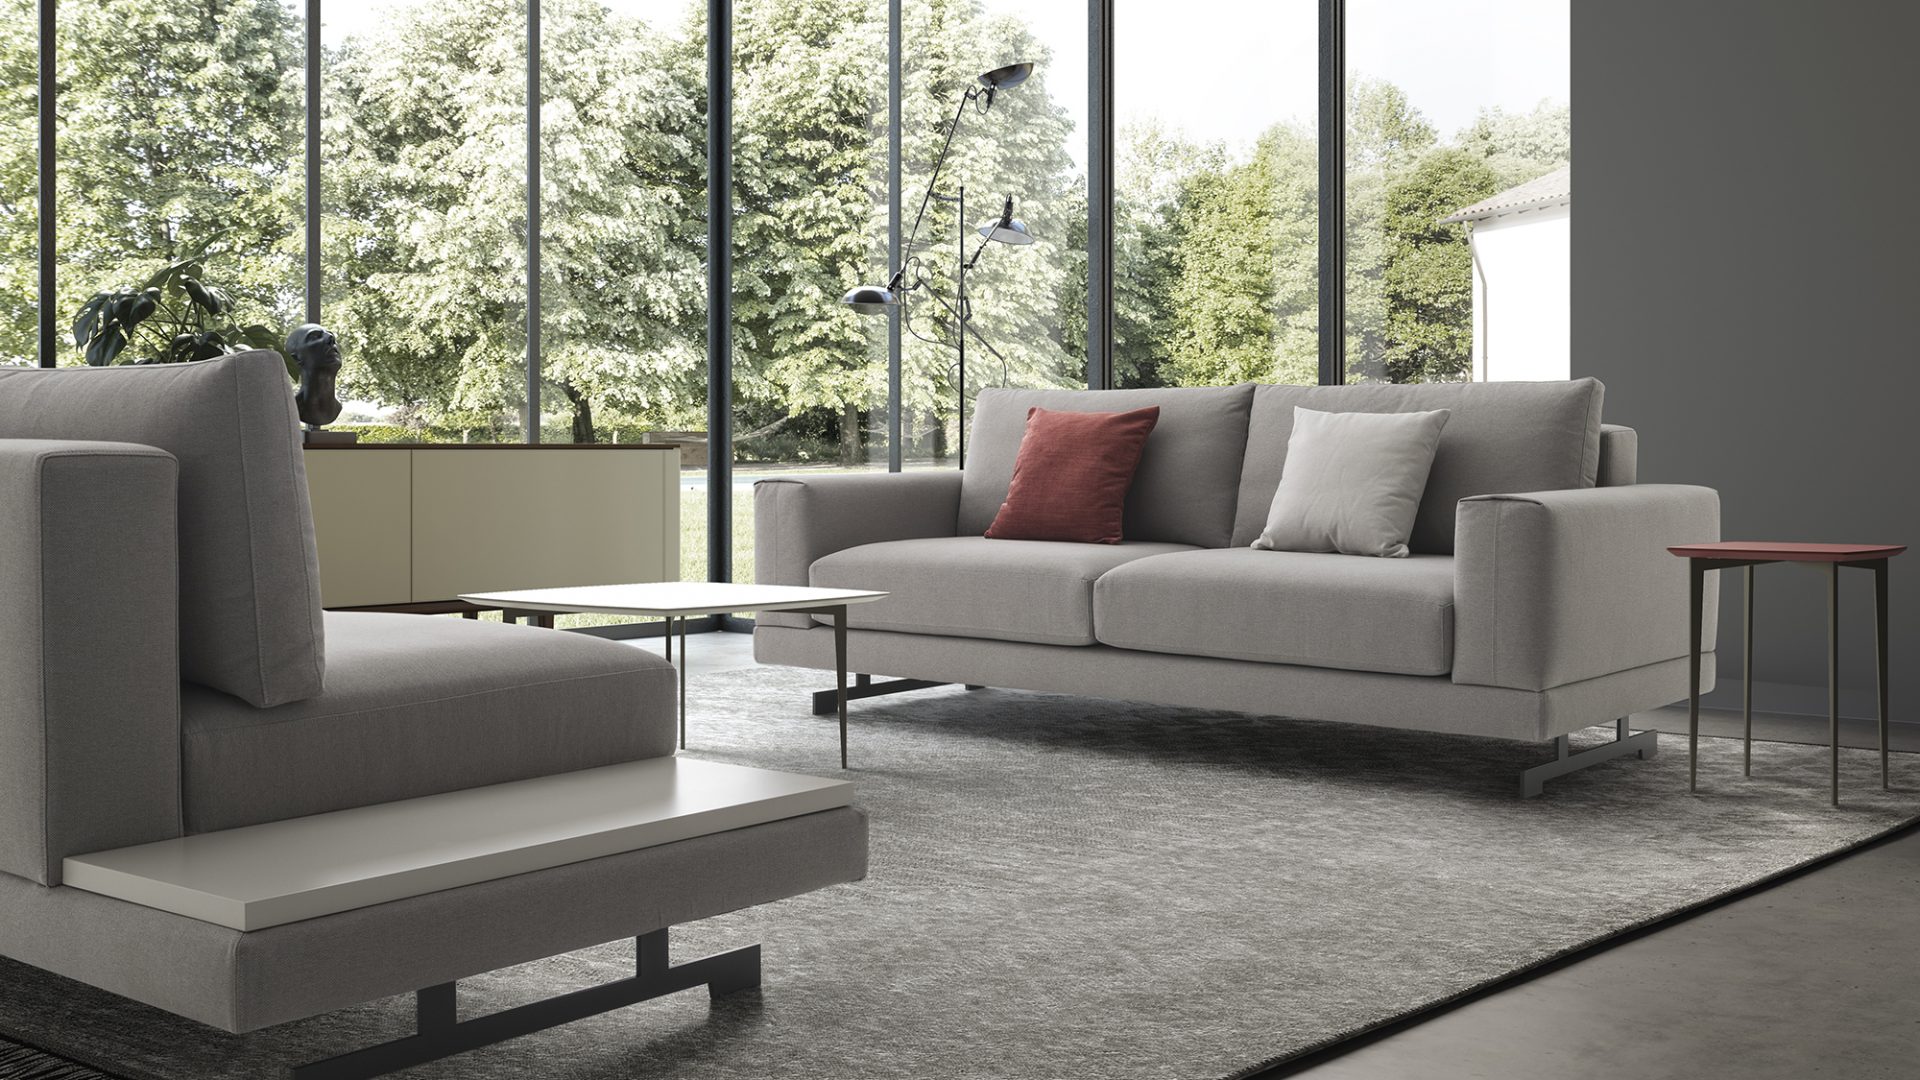 Sofa Catalogue: in-depth study of the Infinito model - Confort Line